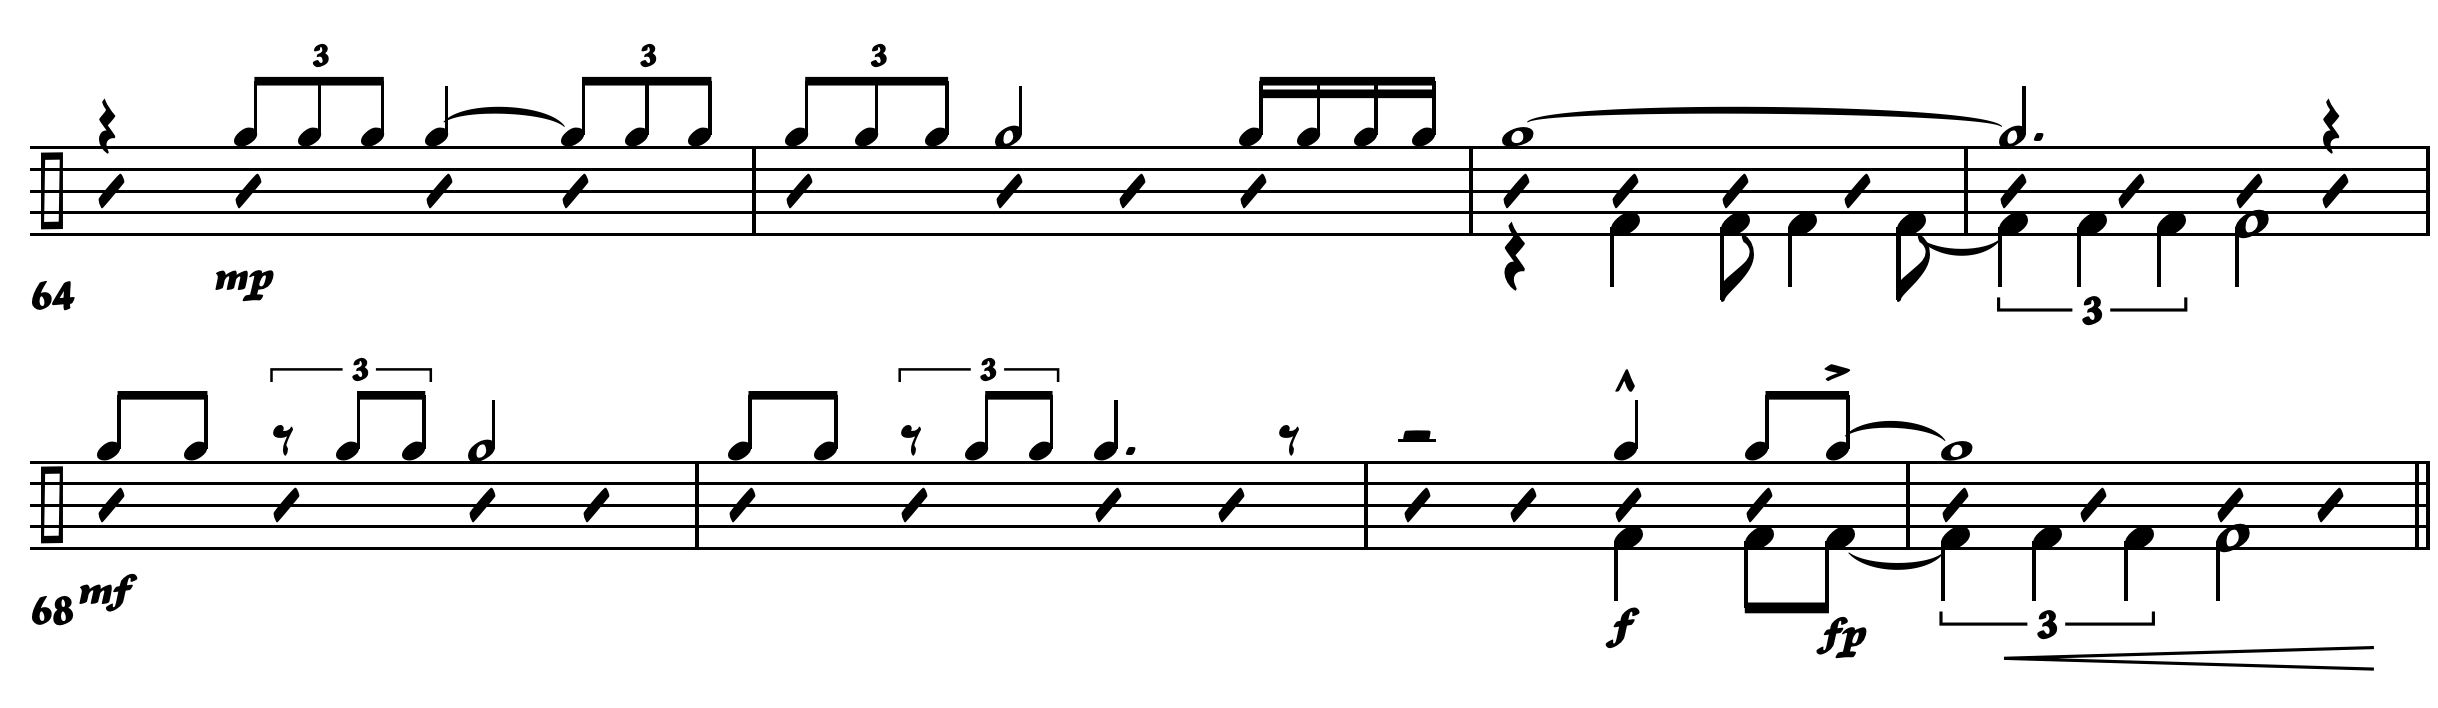 jazz-notation-chords-and-drums-debreved-tim-davies-website